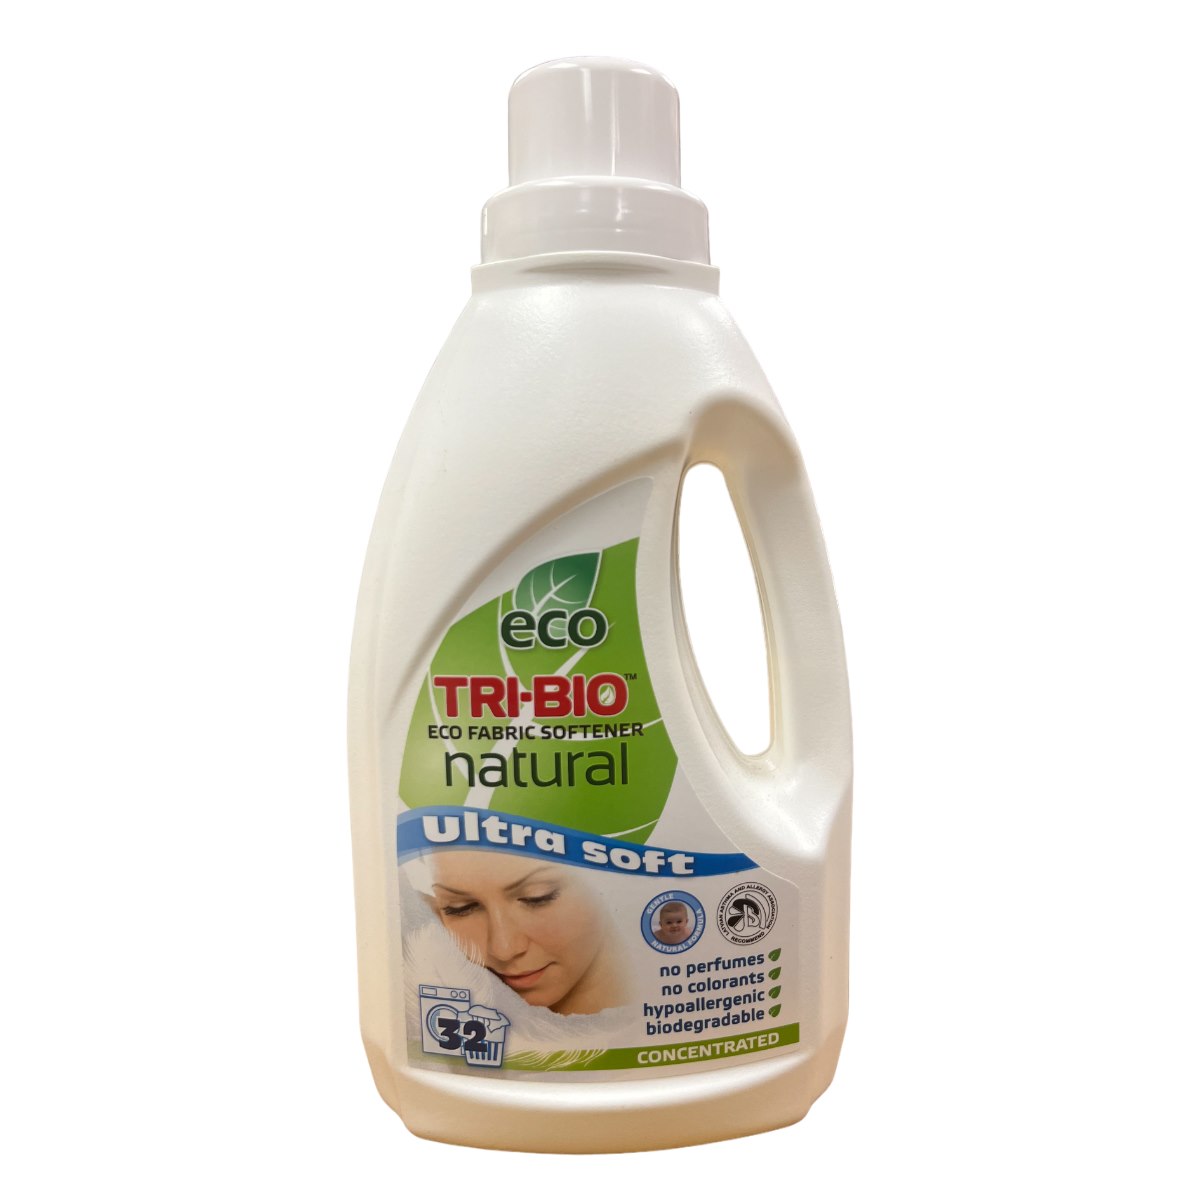 Tri-Bio Natural Ultra Soft Eco Fabric Softener 940ml 